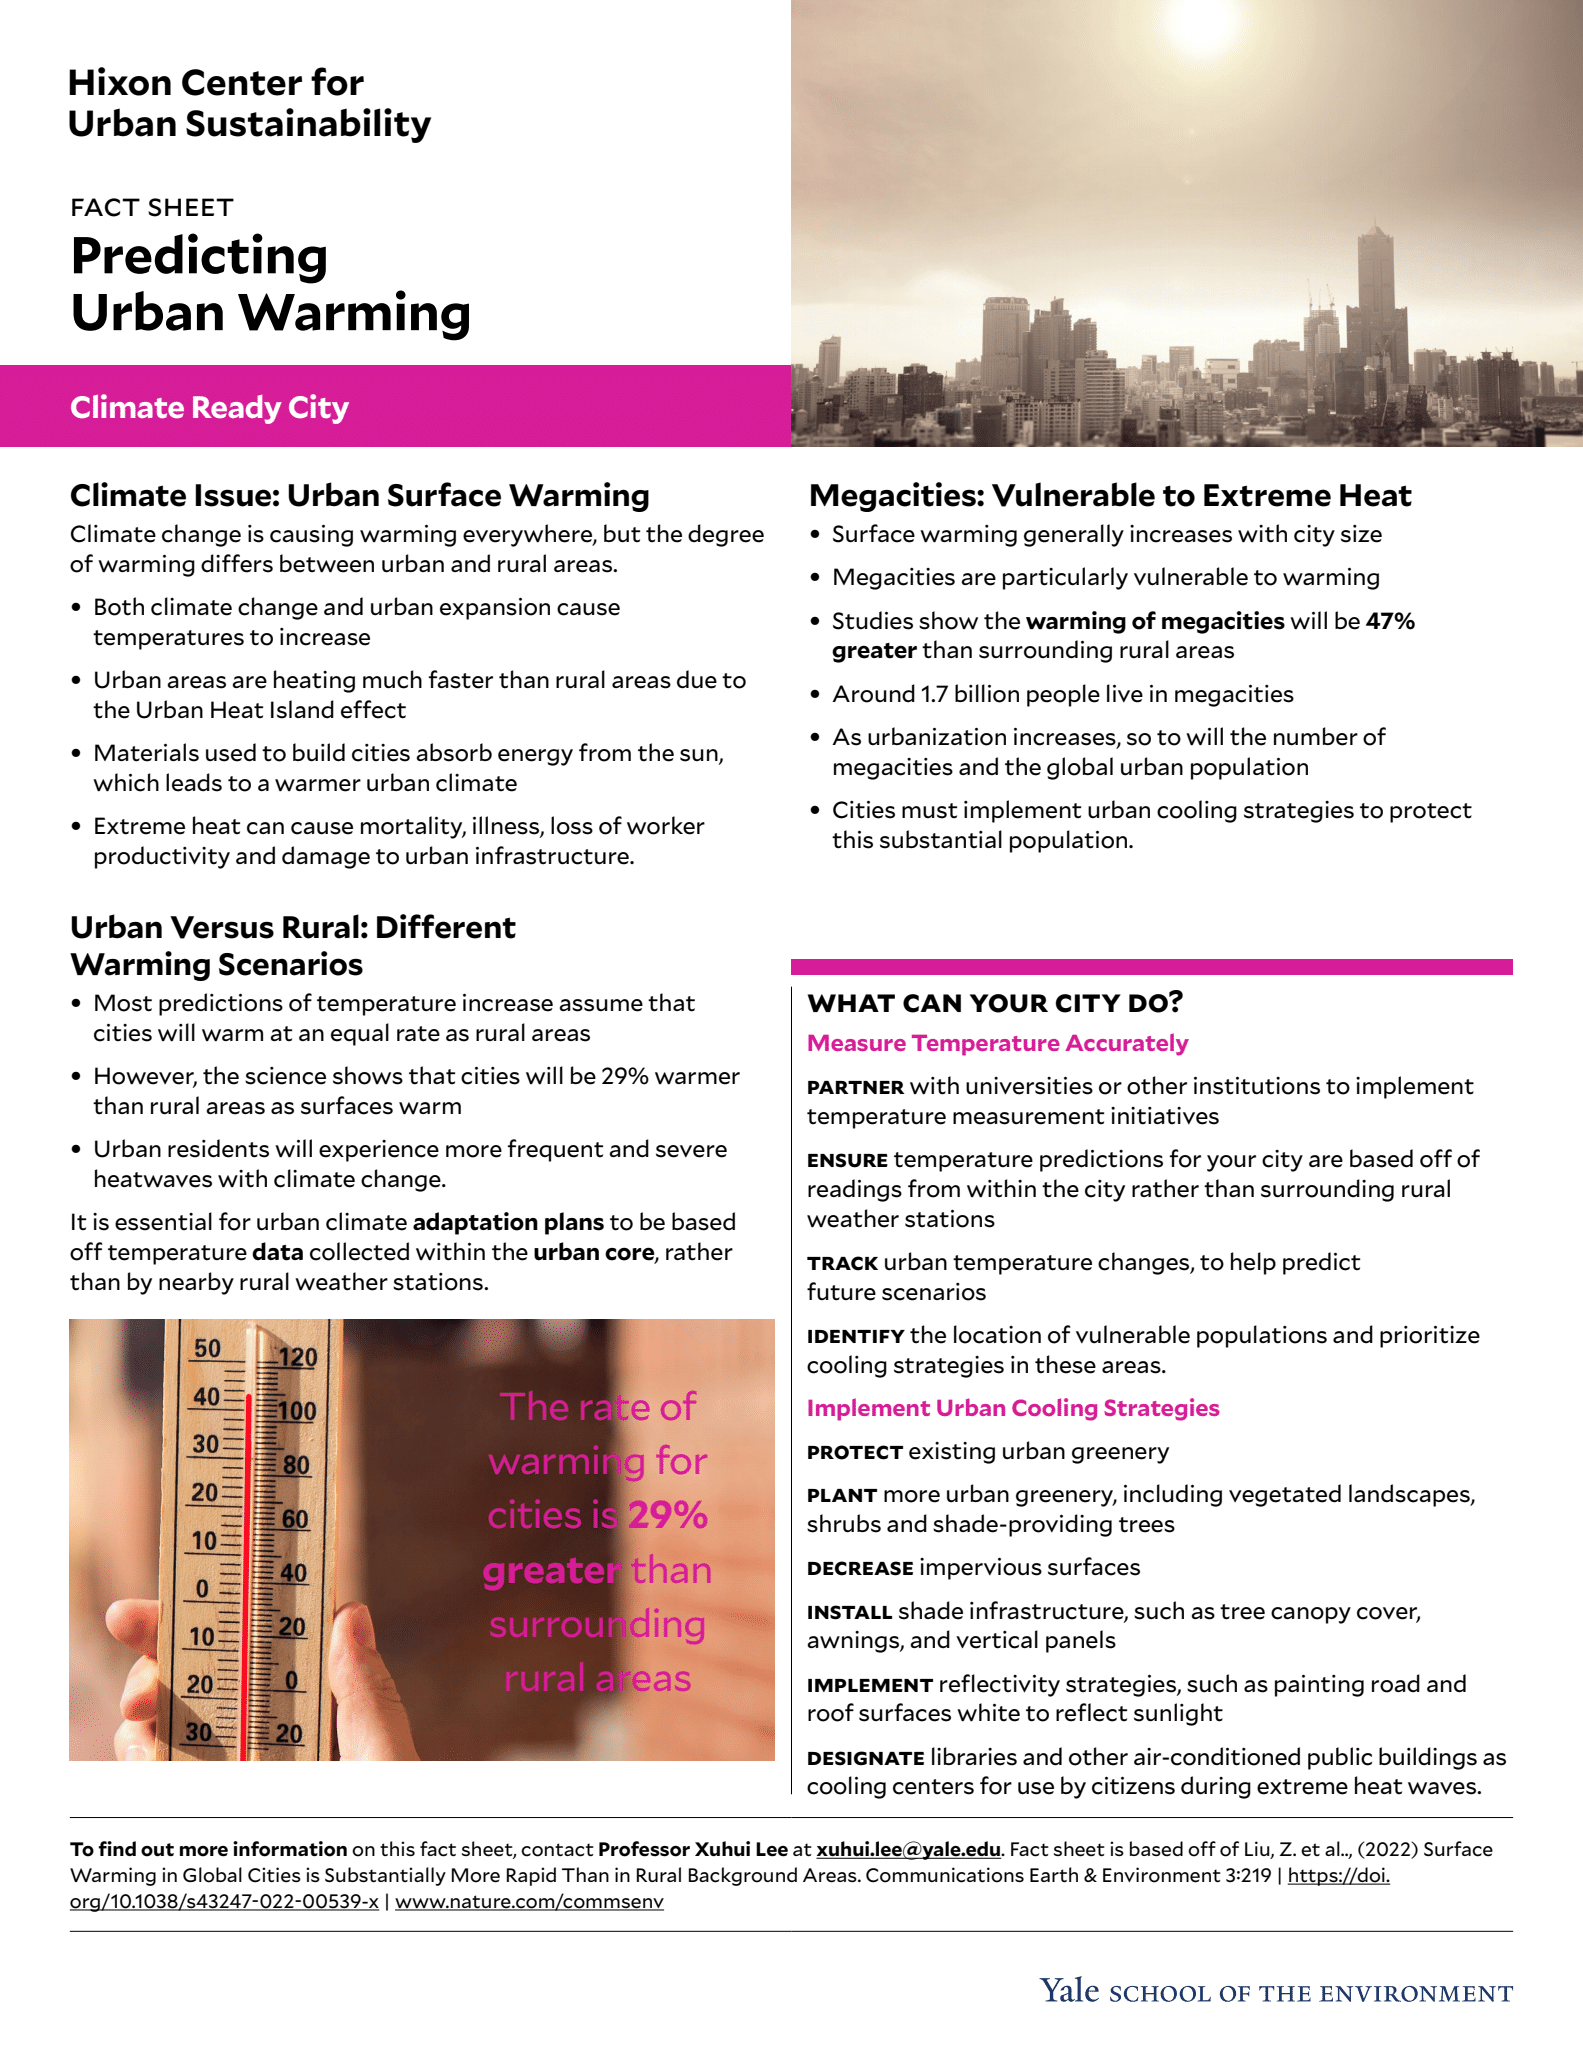 Fact sheet for predicting urban warming tool